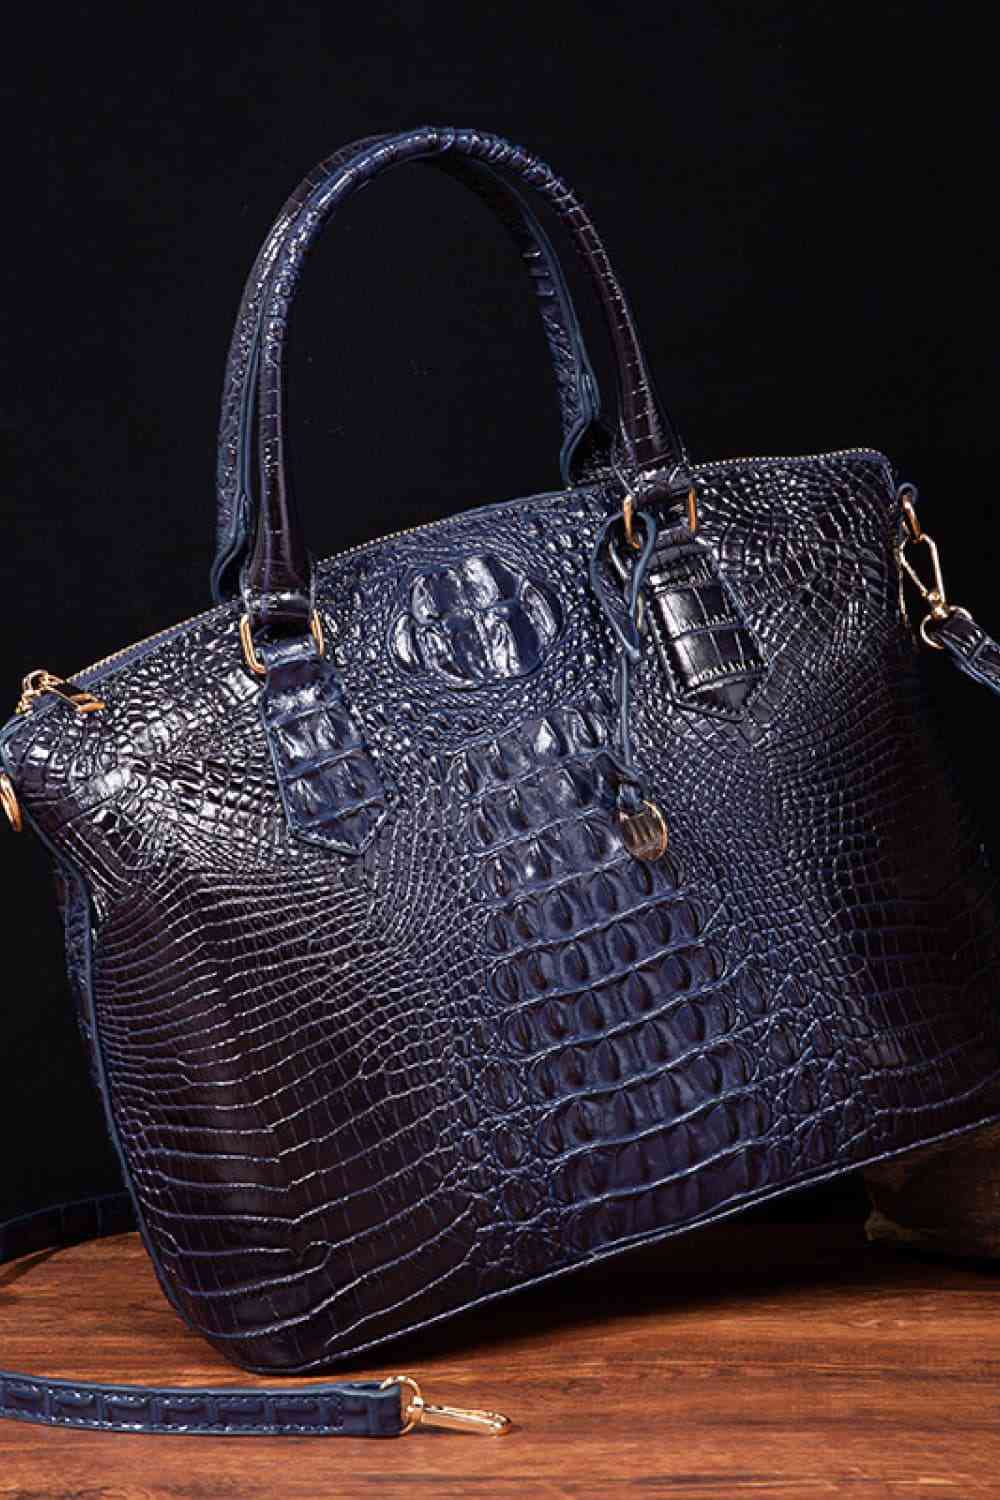 Ava Mea PU Croc Leather Handbag